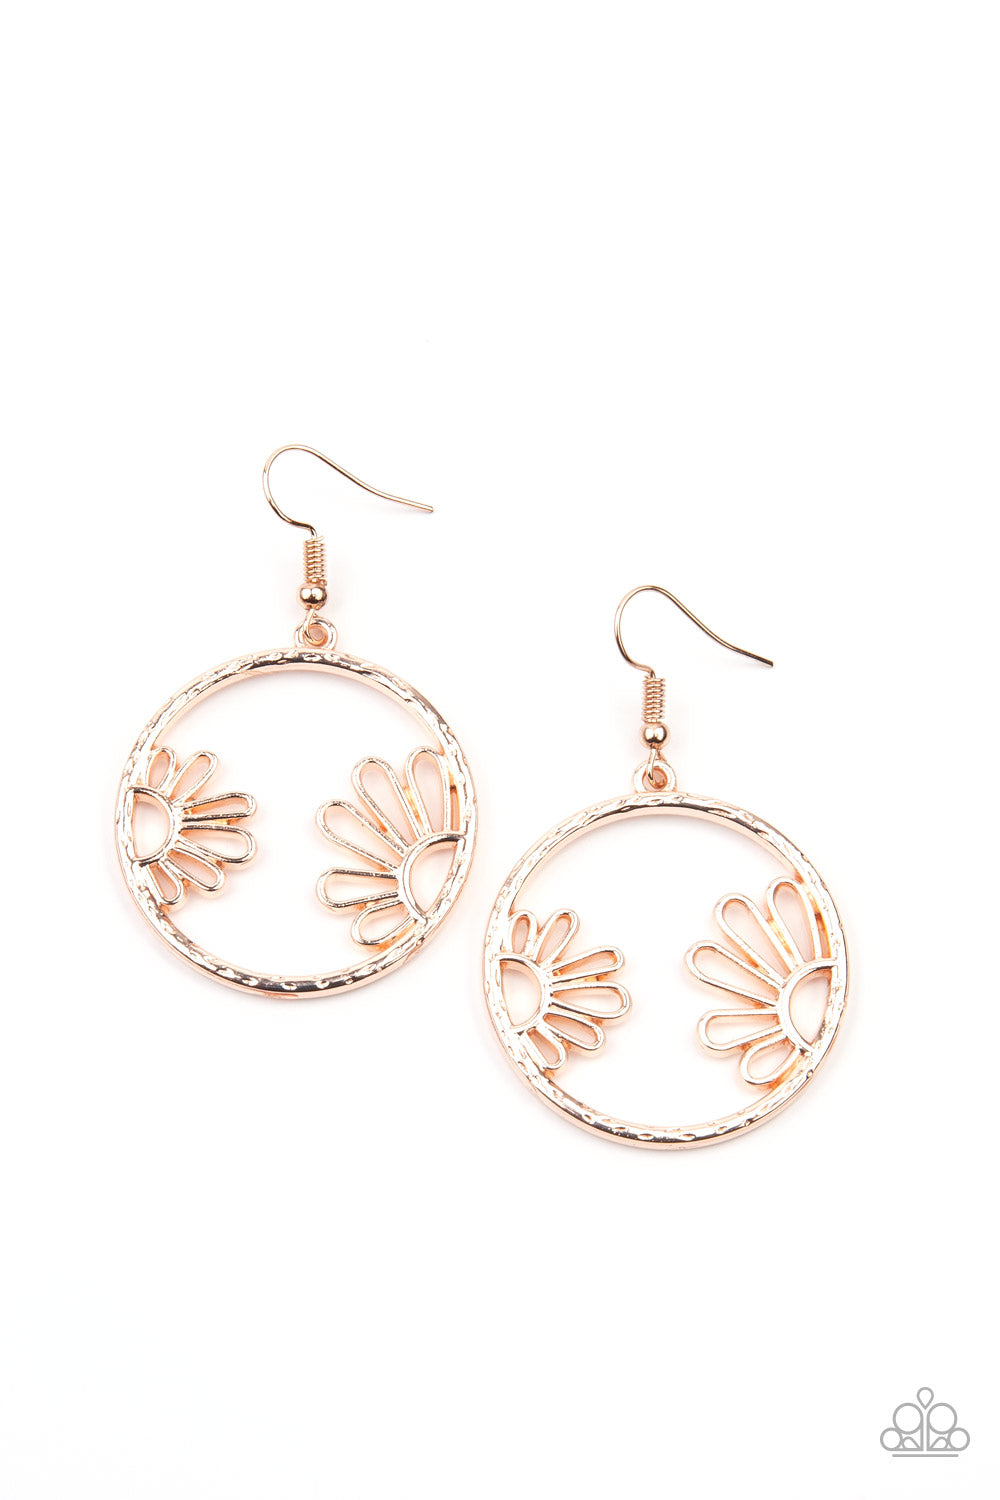 Demurely Daisy - rose gold - Paparazzi earrings